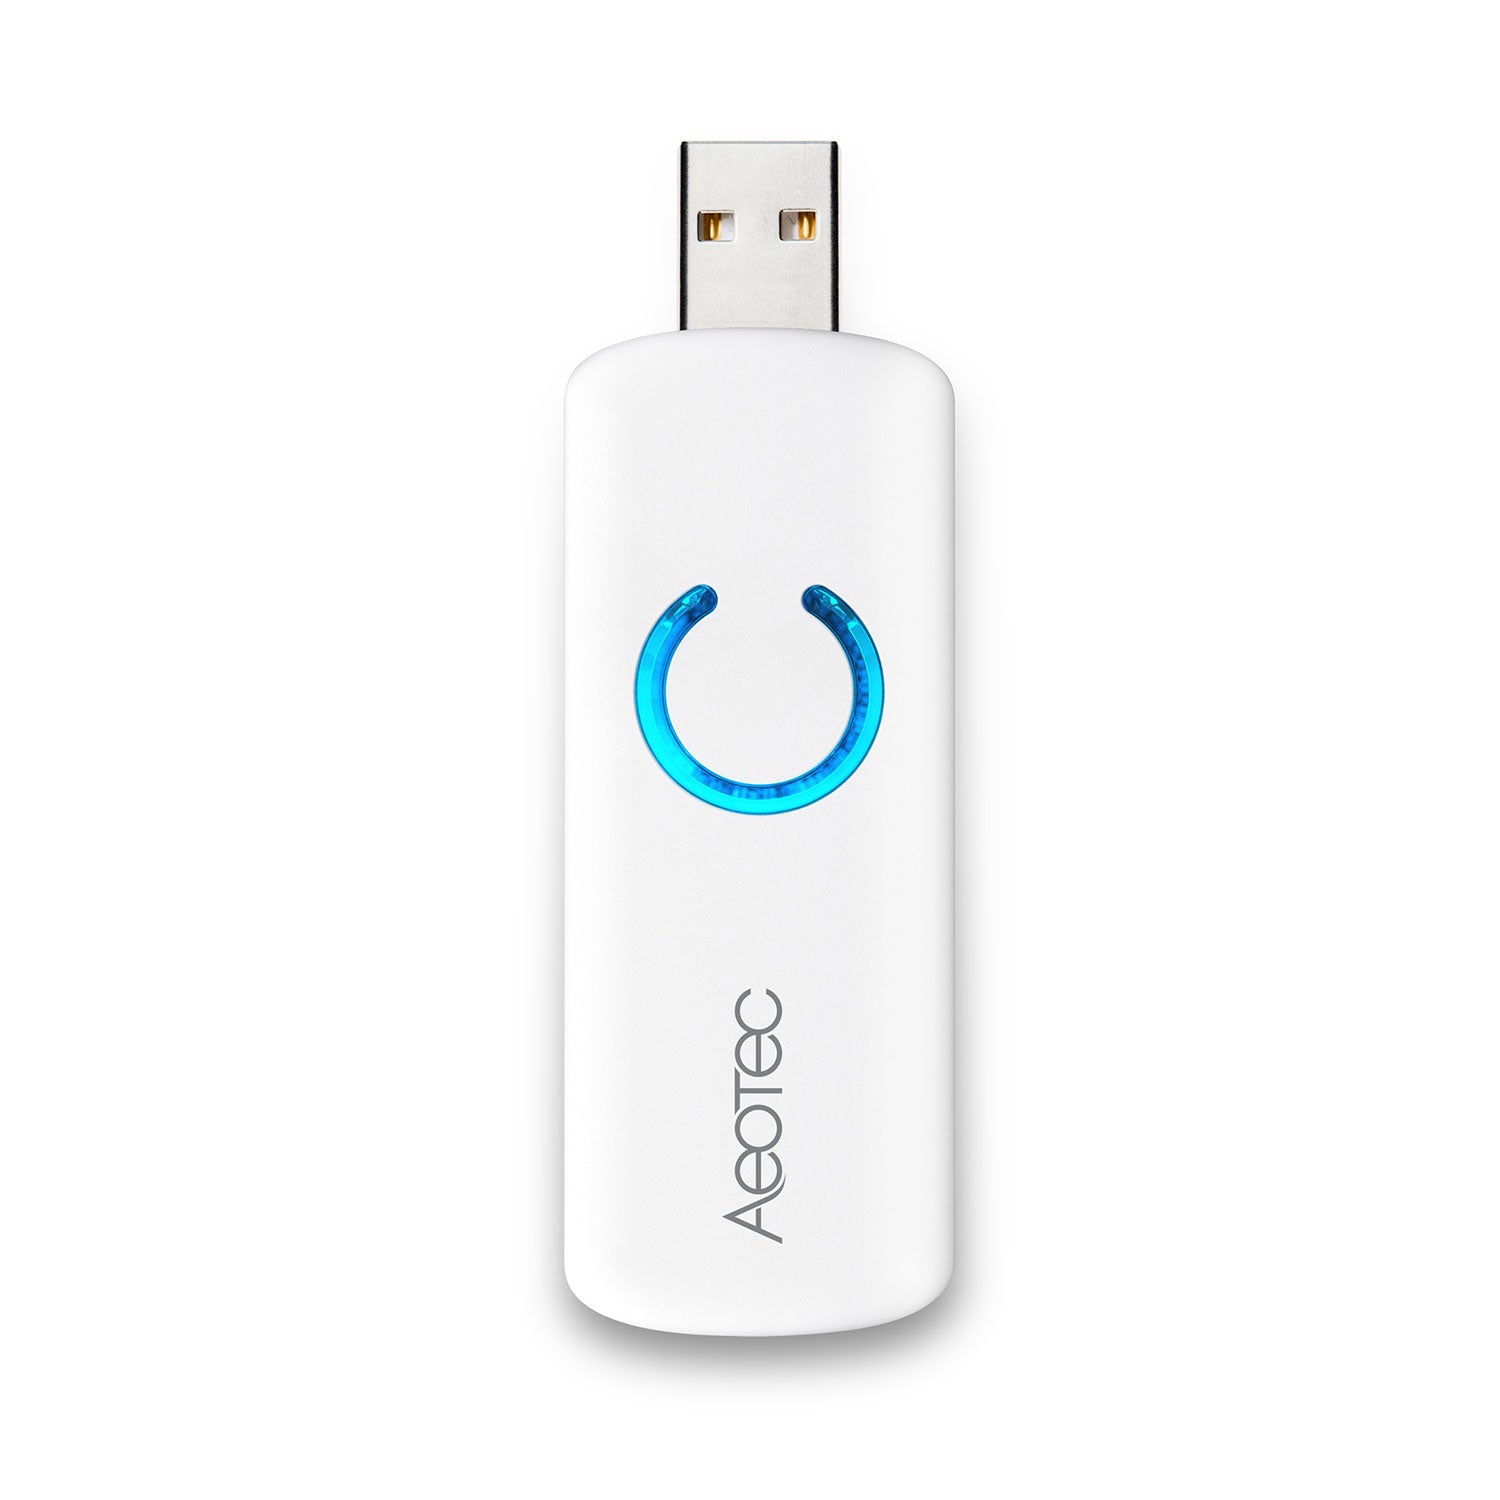 Aeotec USB Adapter mit Batterie Z-Stick GEN5 Frontansicht